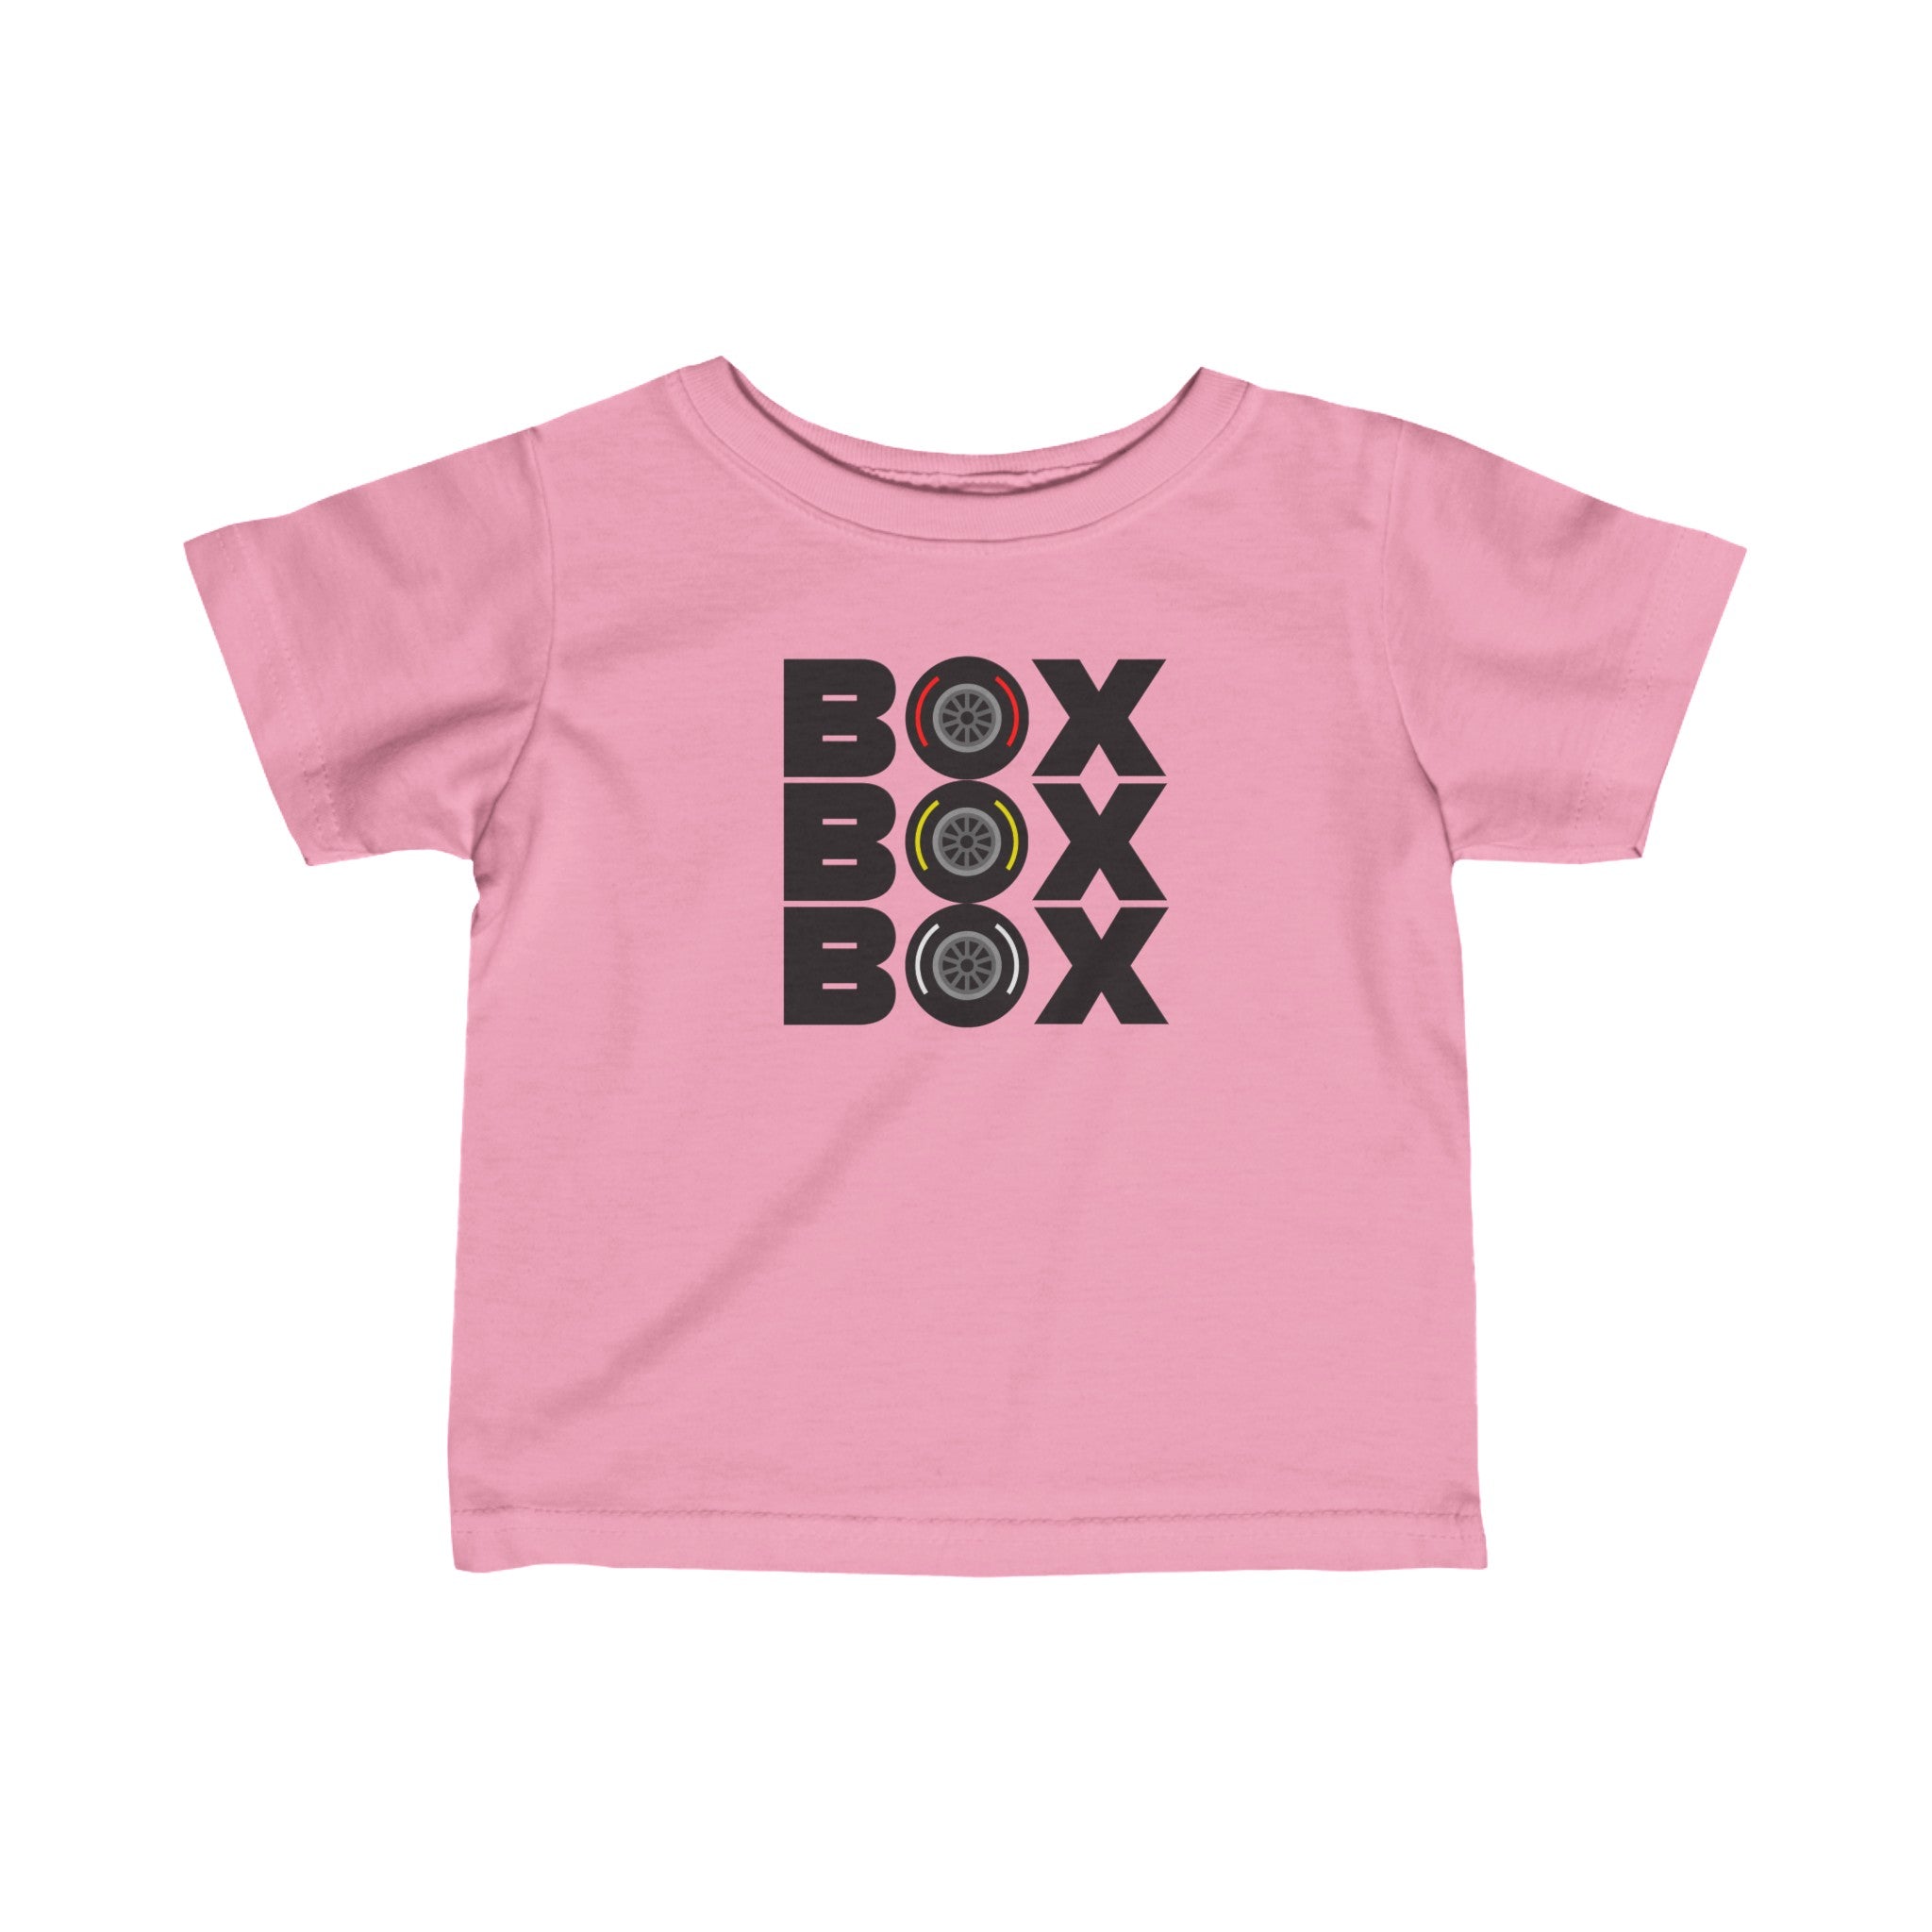 BOX BOX BOX Infant Fine Jersey Tee